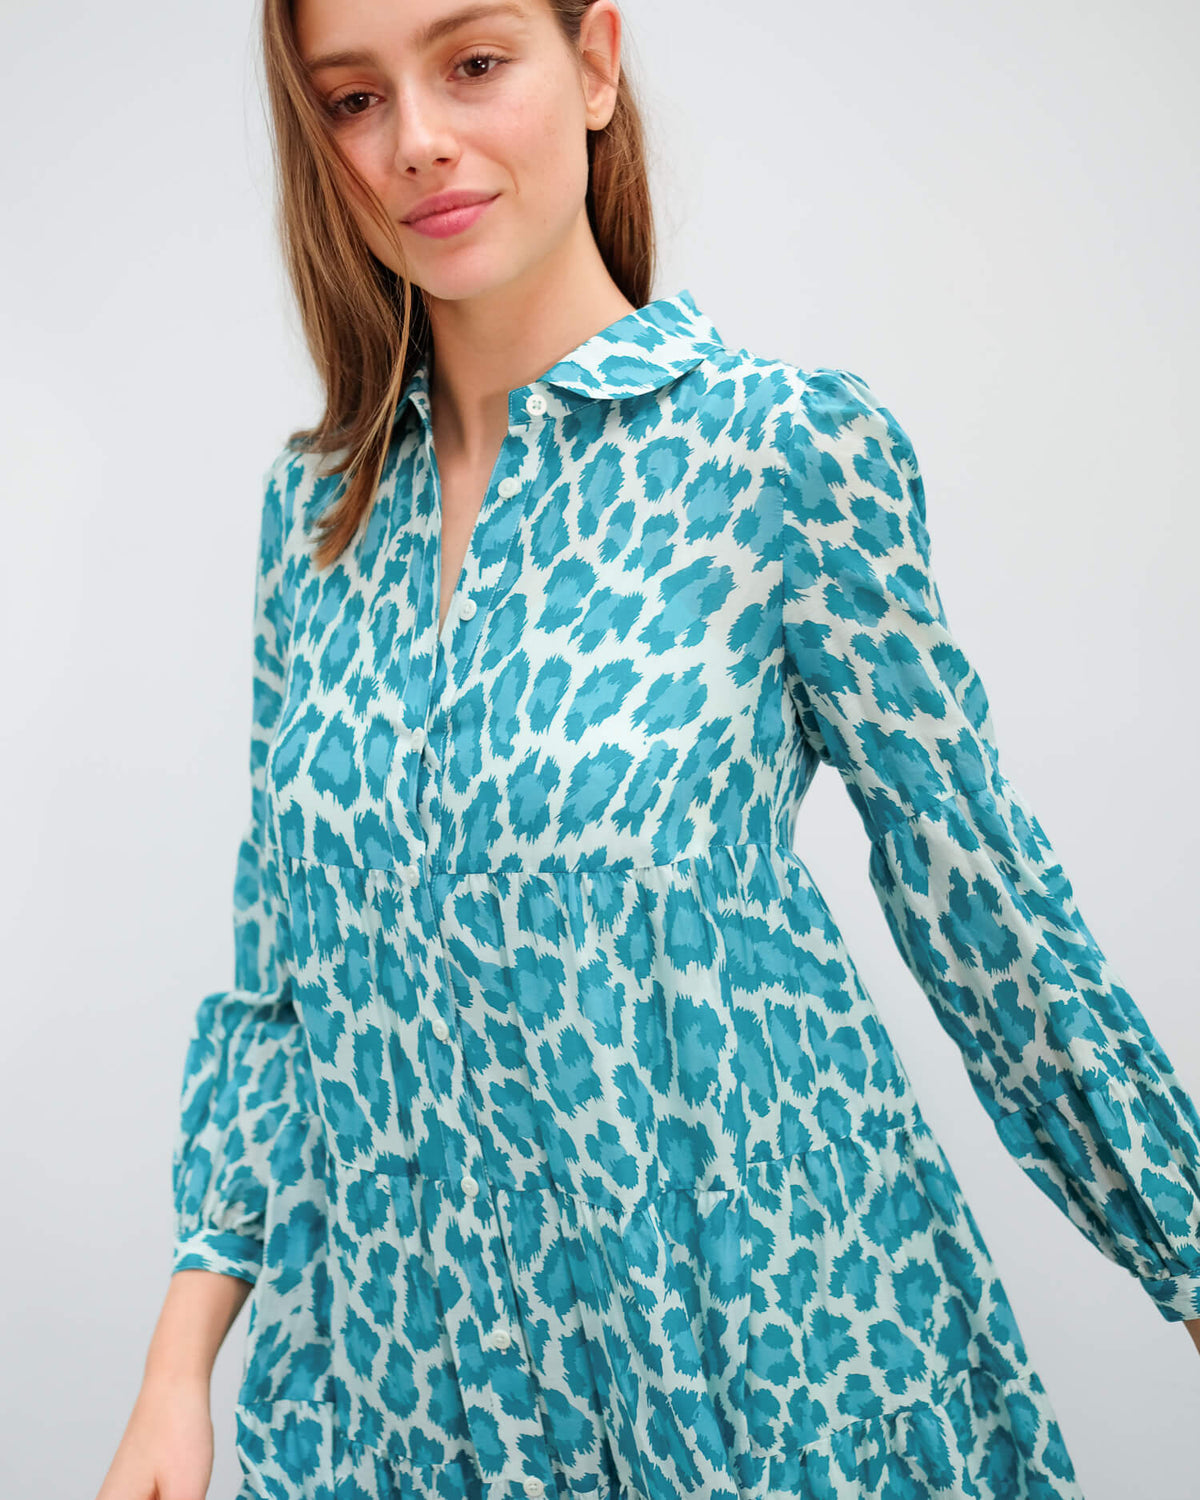 DVF Kiara dress in leopard